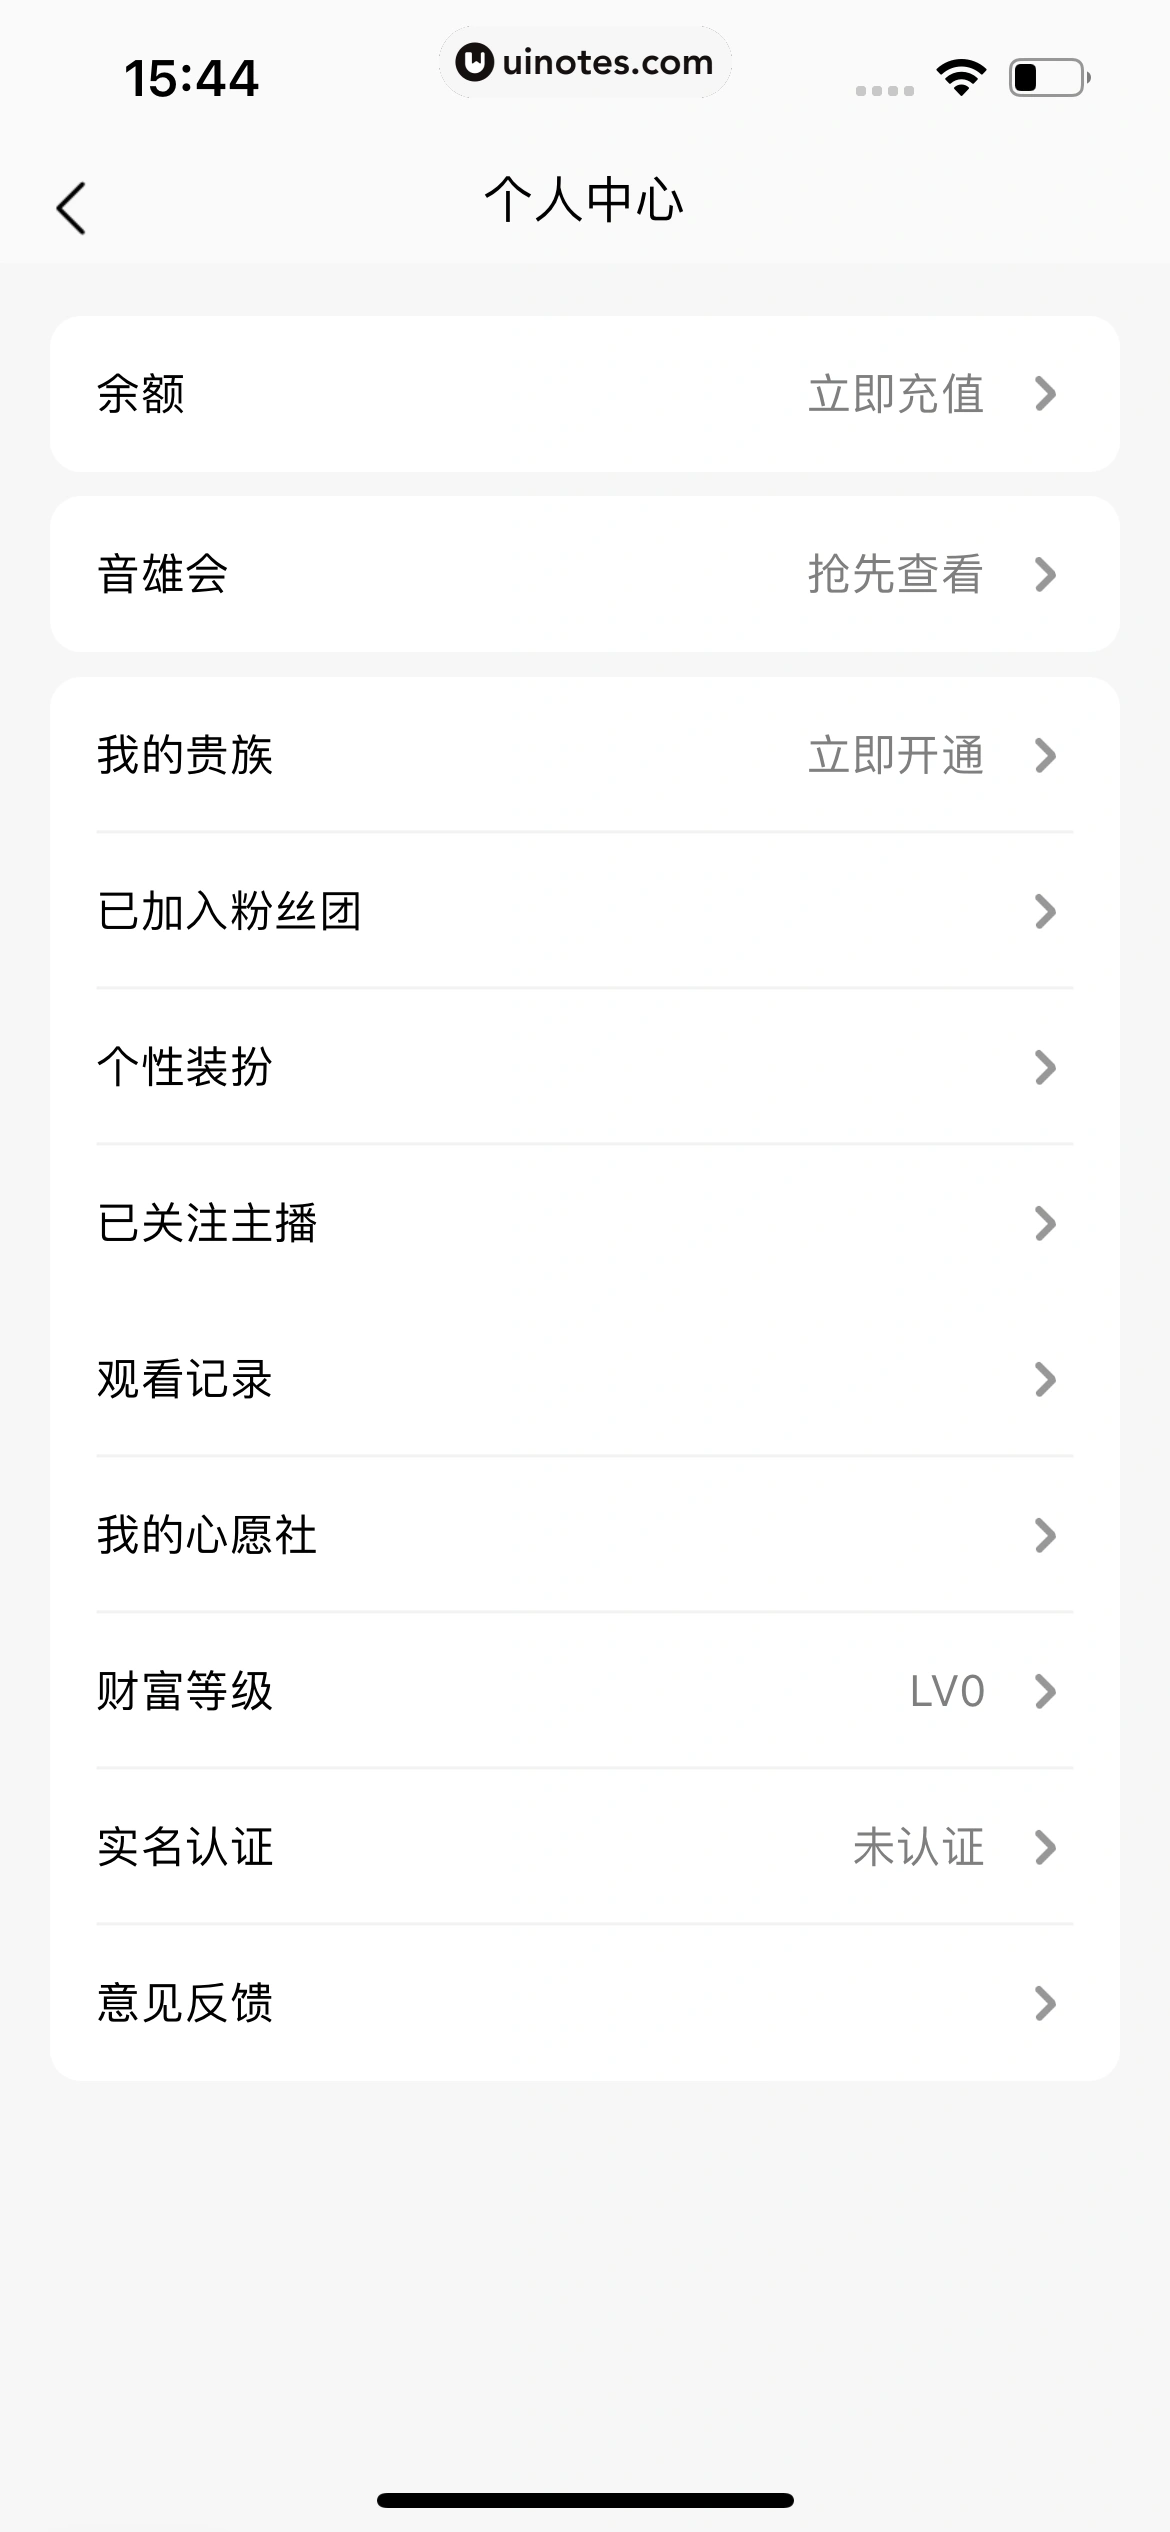 QQ音乐 App 截图 374 - UI Notes